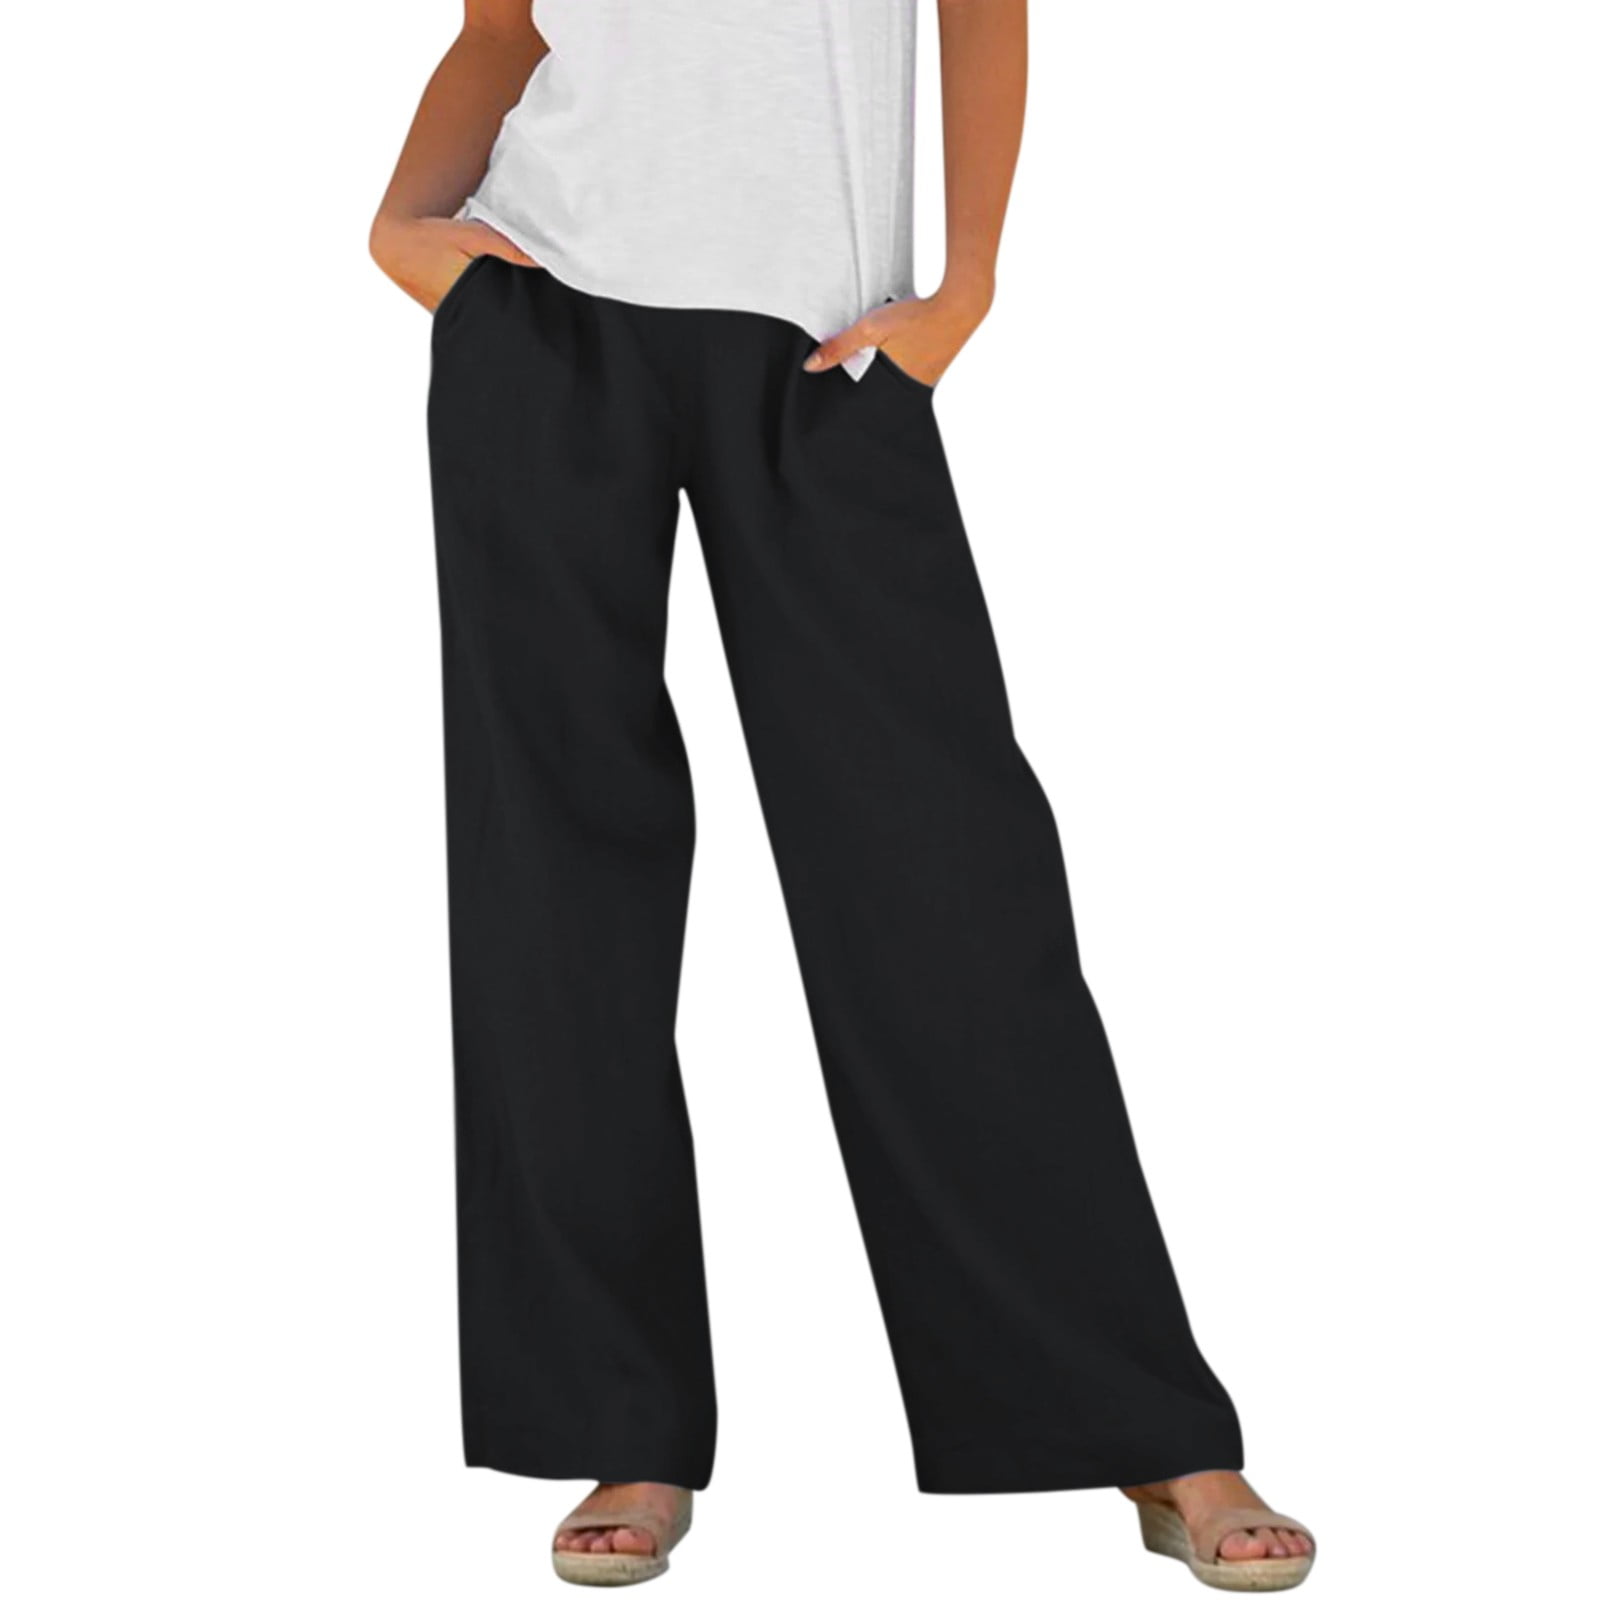 HSMQHJWE Black Slacks Cotton Pants For Women Casual Petite Womens Casual  Solid Color Loose Pockets Elastic Waist Pants Long Trousers Fall Pants 